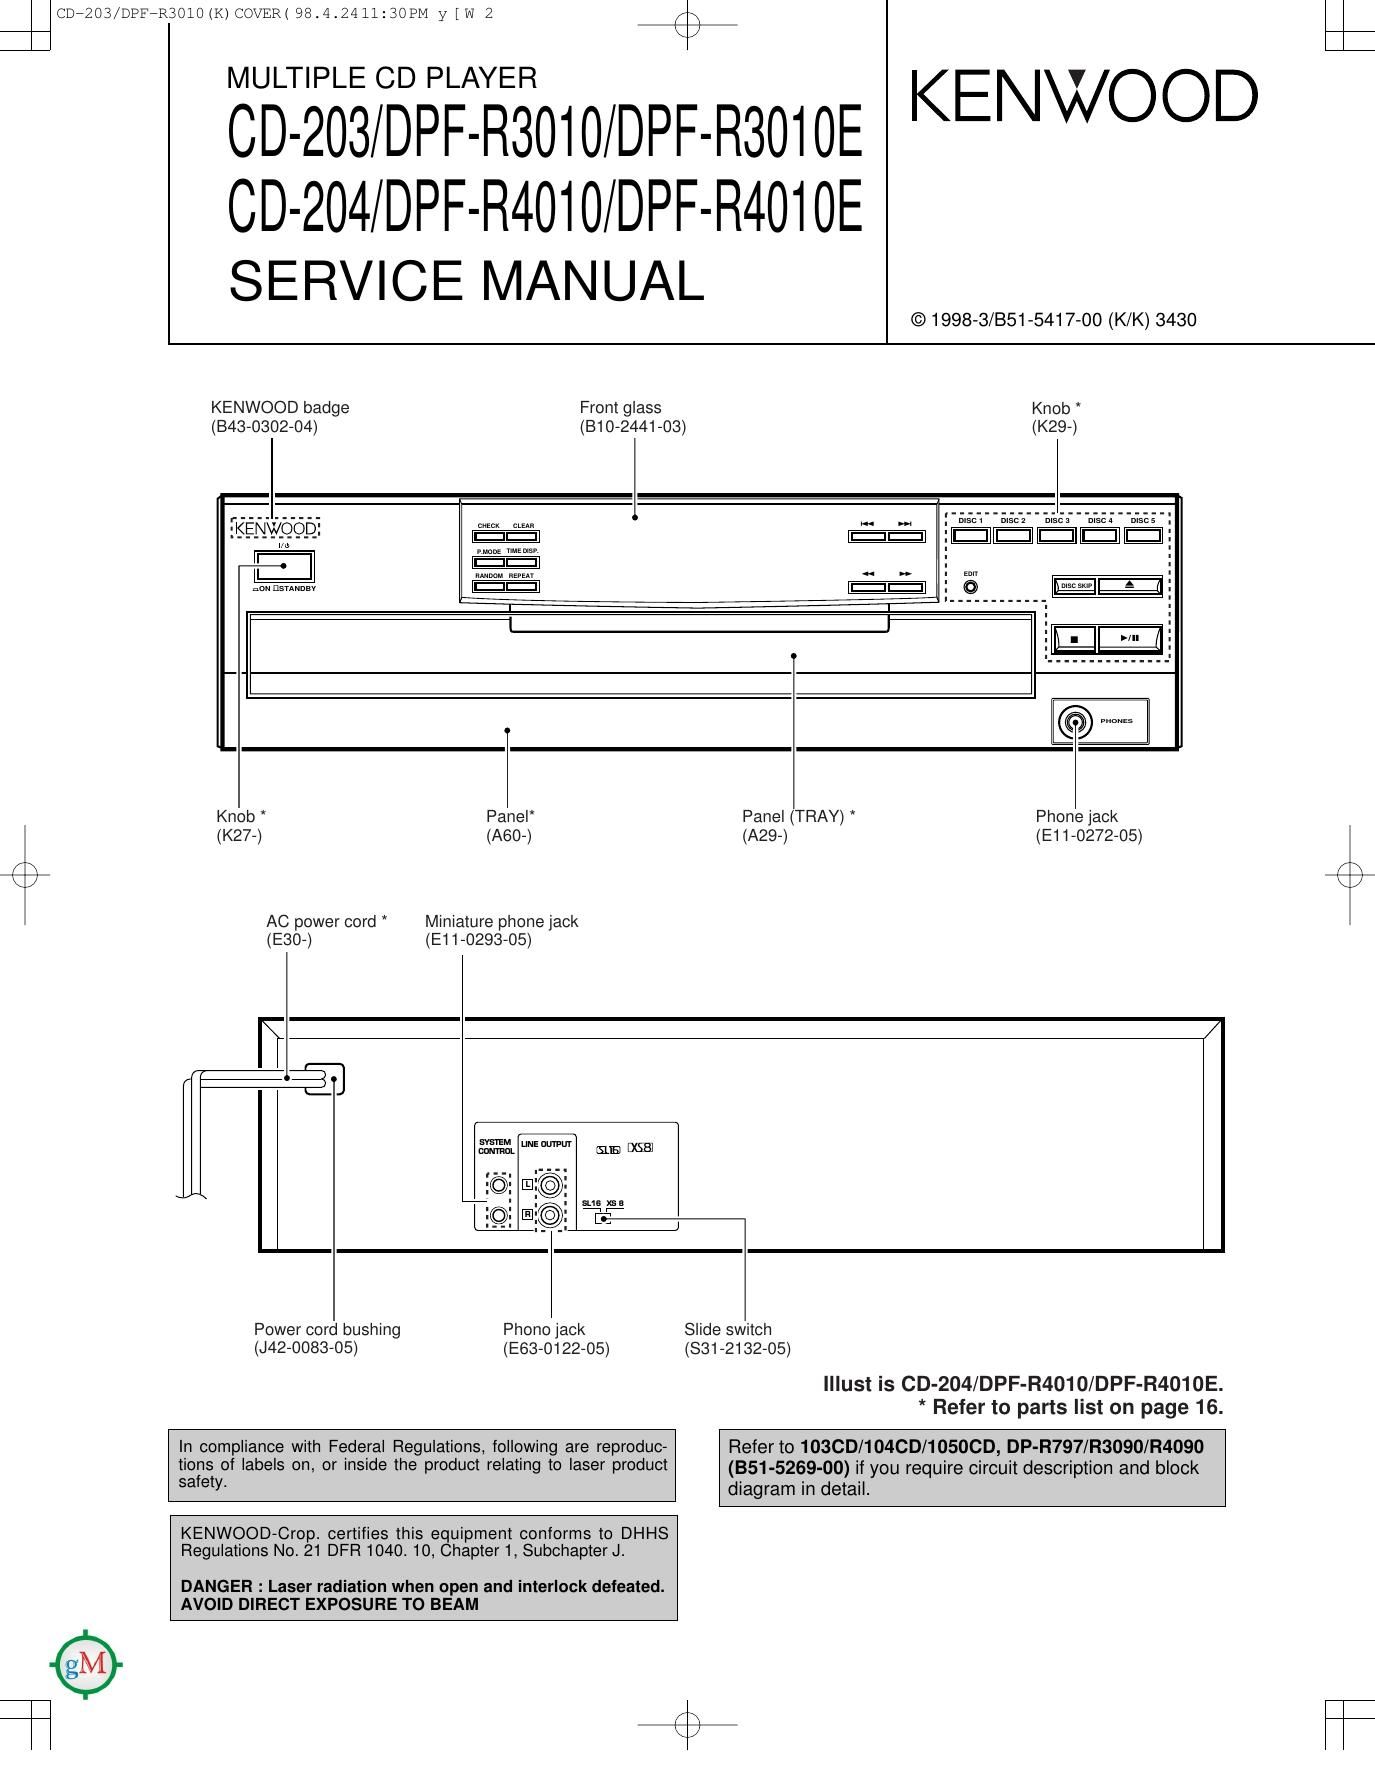 Kenwood DPFR 3010 Service Manual